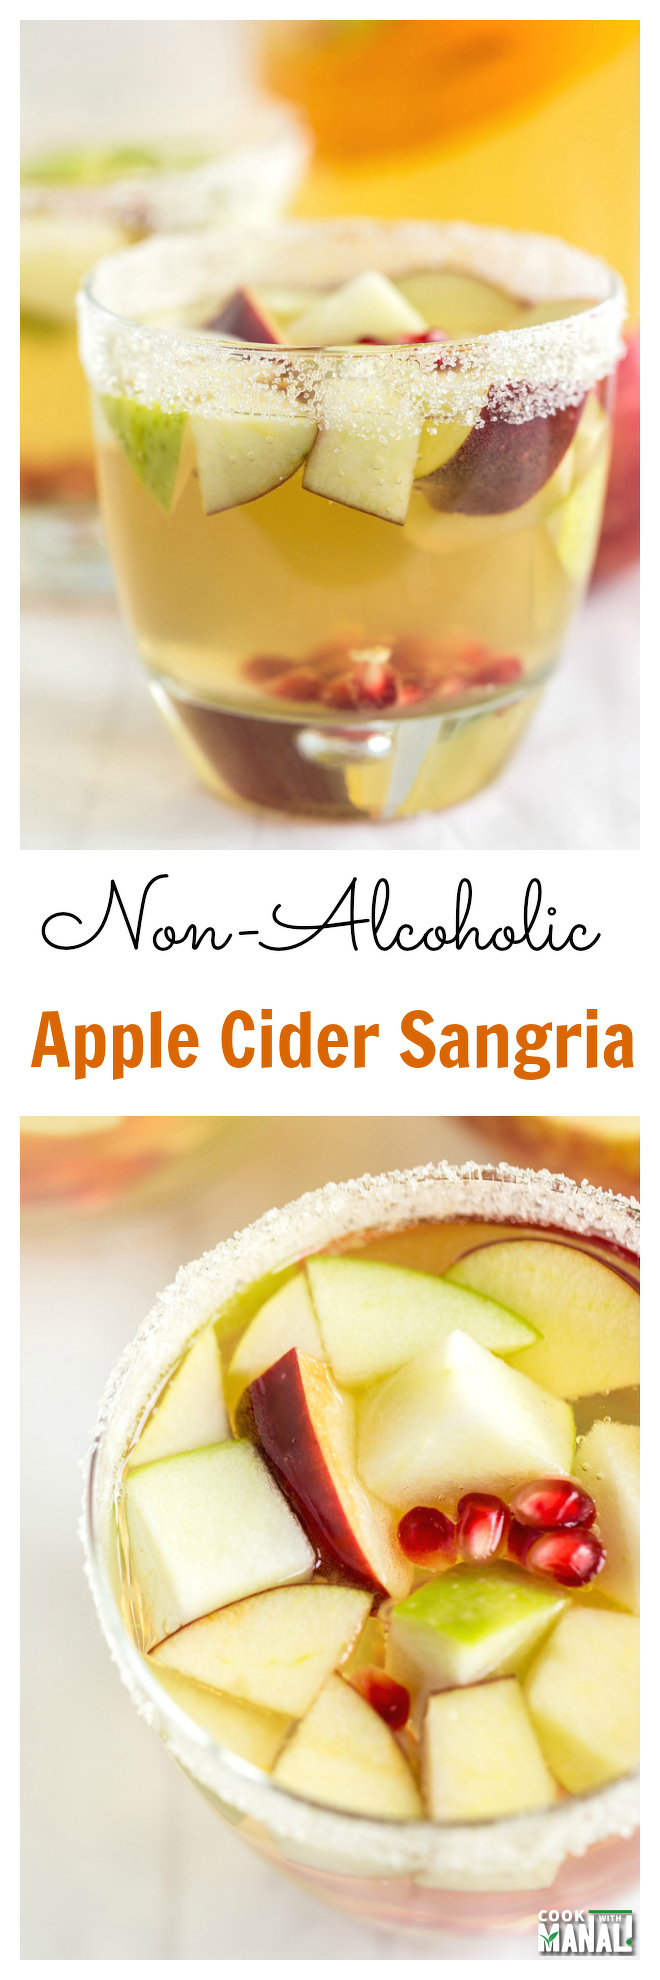 Non Alcoholic Apple Cider Sangria Collage